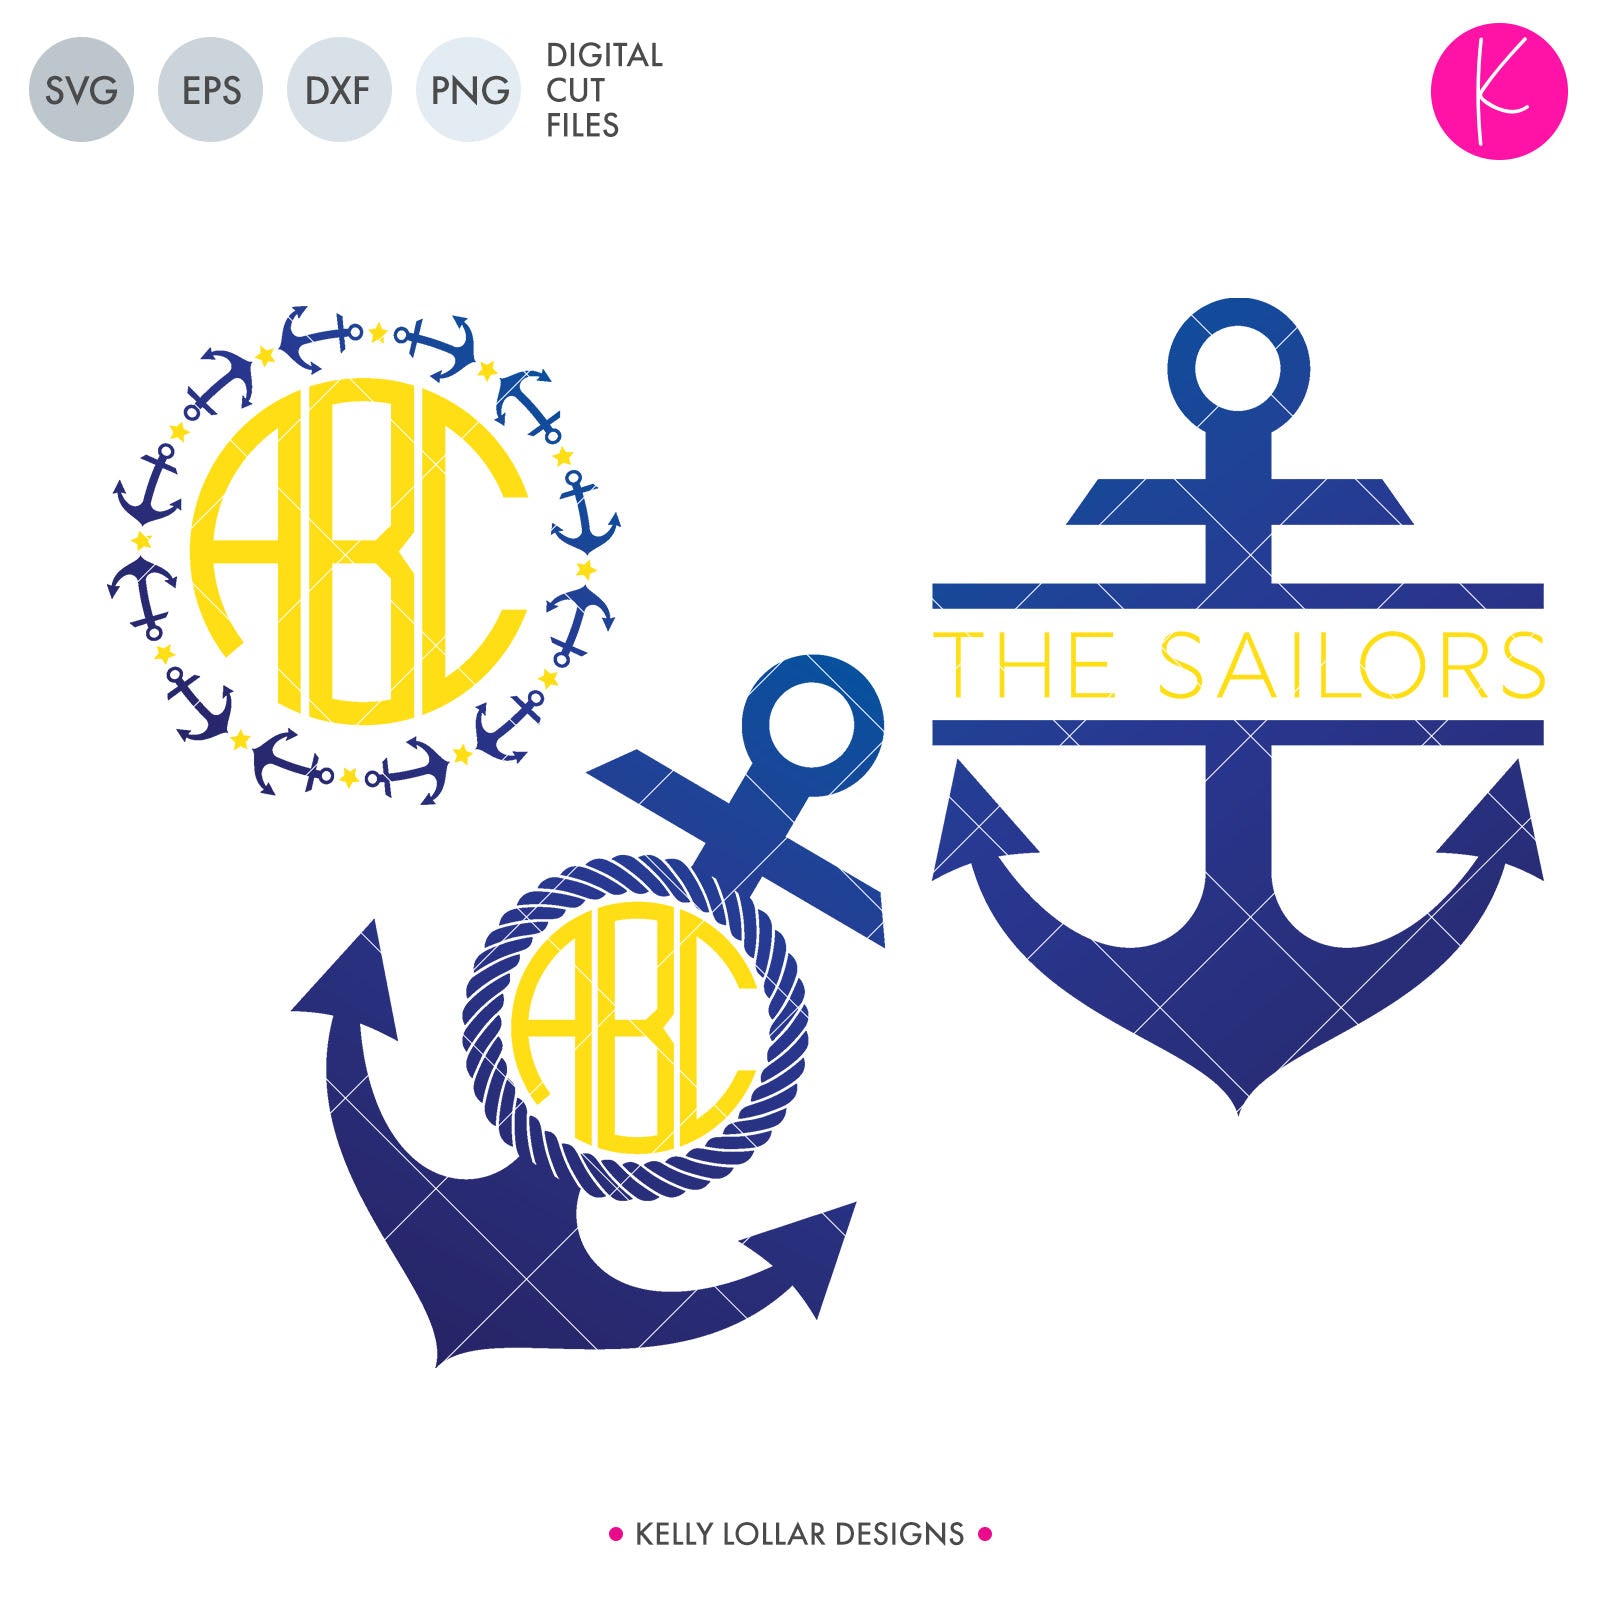 Download Svg Nautical Monogram Anchors Anchor Svg Anchor Monogram Svg Monograms Anchors Nautical Svg Anchor Cut File Anchor Monogram Clip Art Art Collectibles